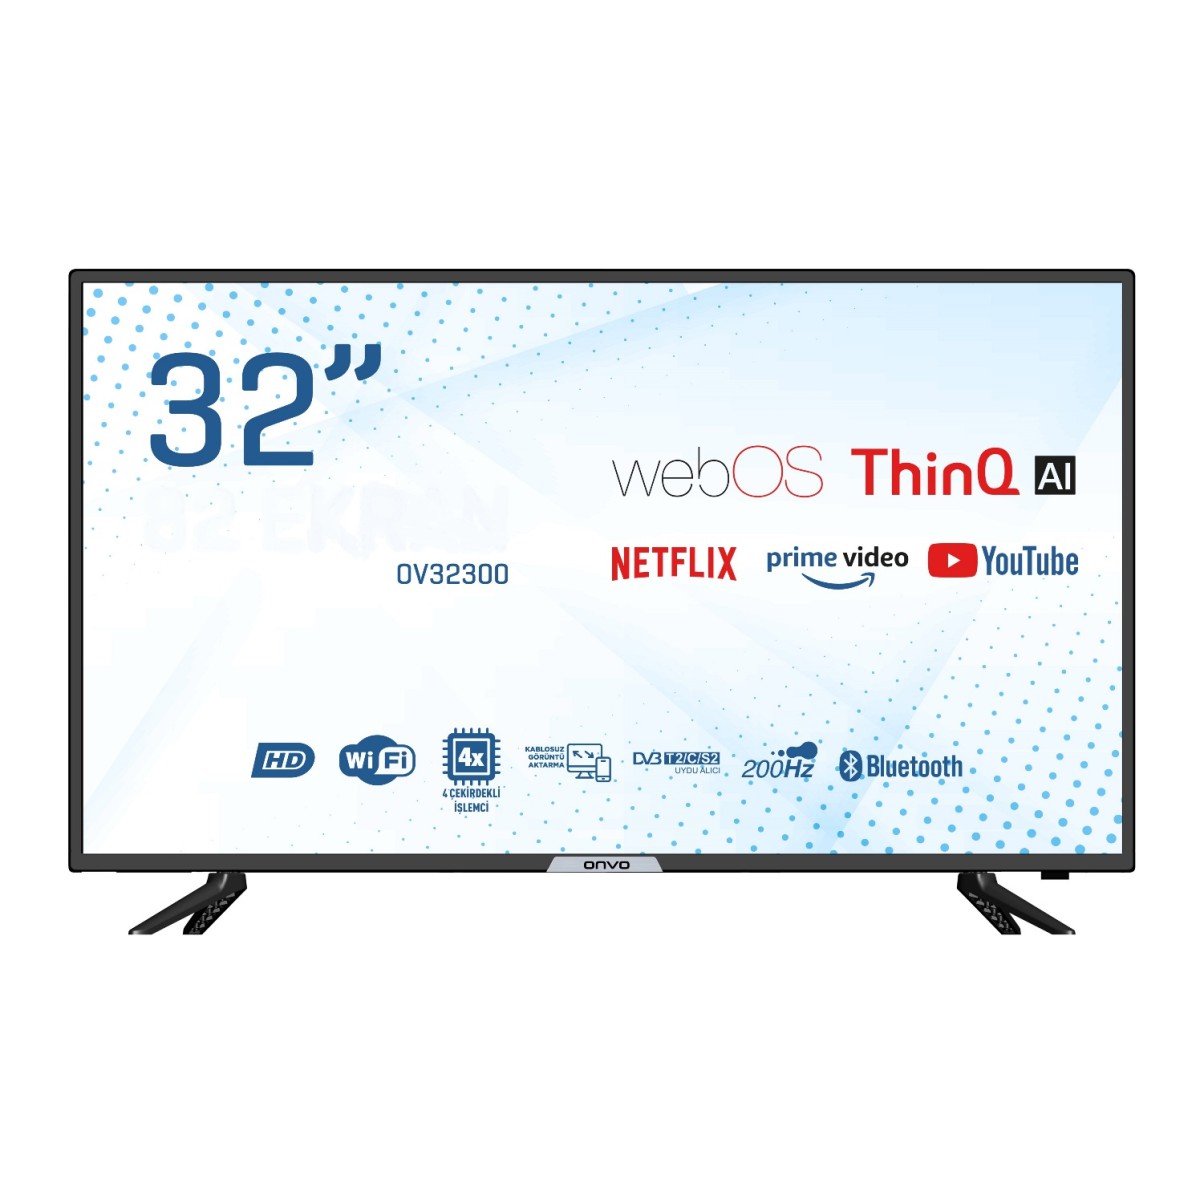 ONVO OV32300 WEBOS SMART LED TV